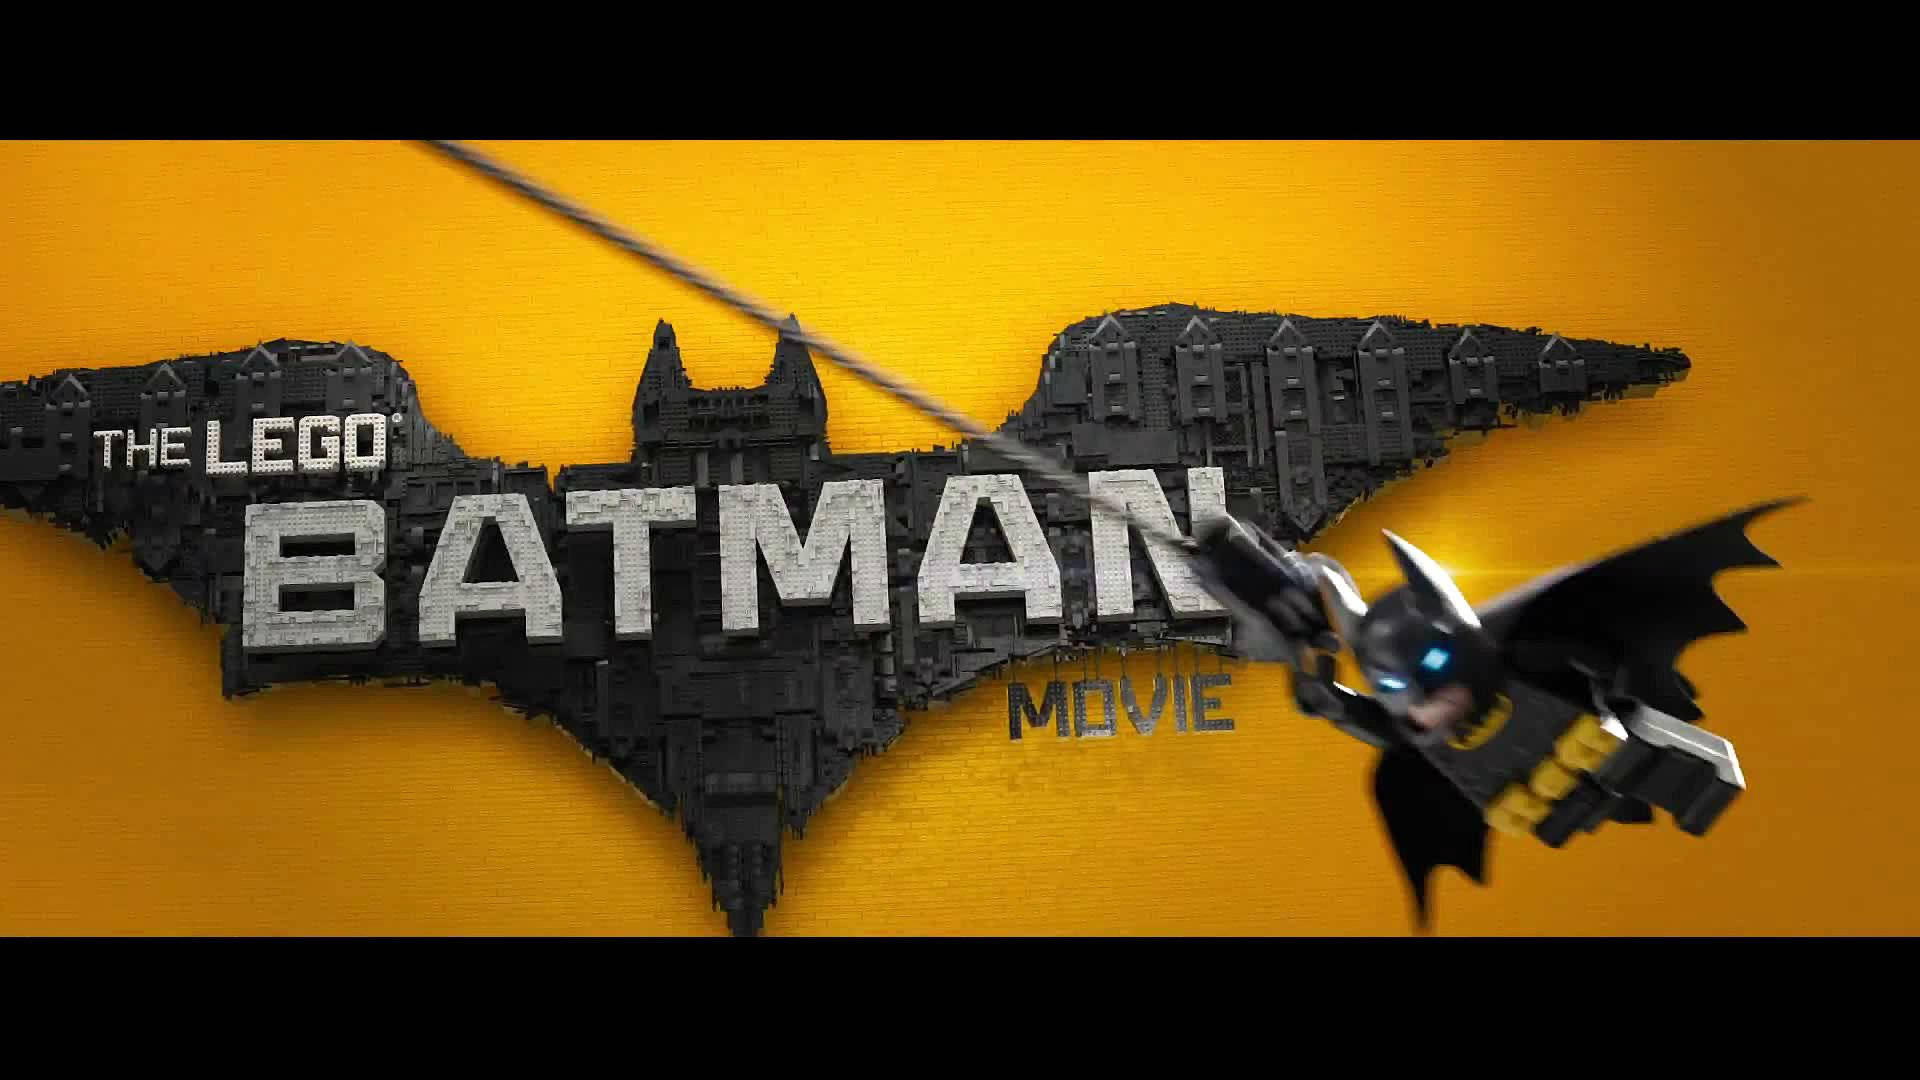 The Lego Batman Movie Poster Wallpaper